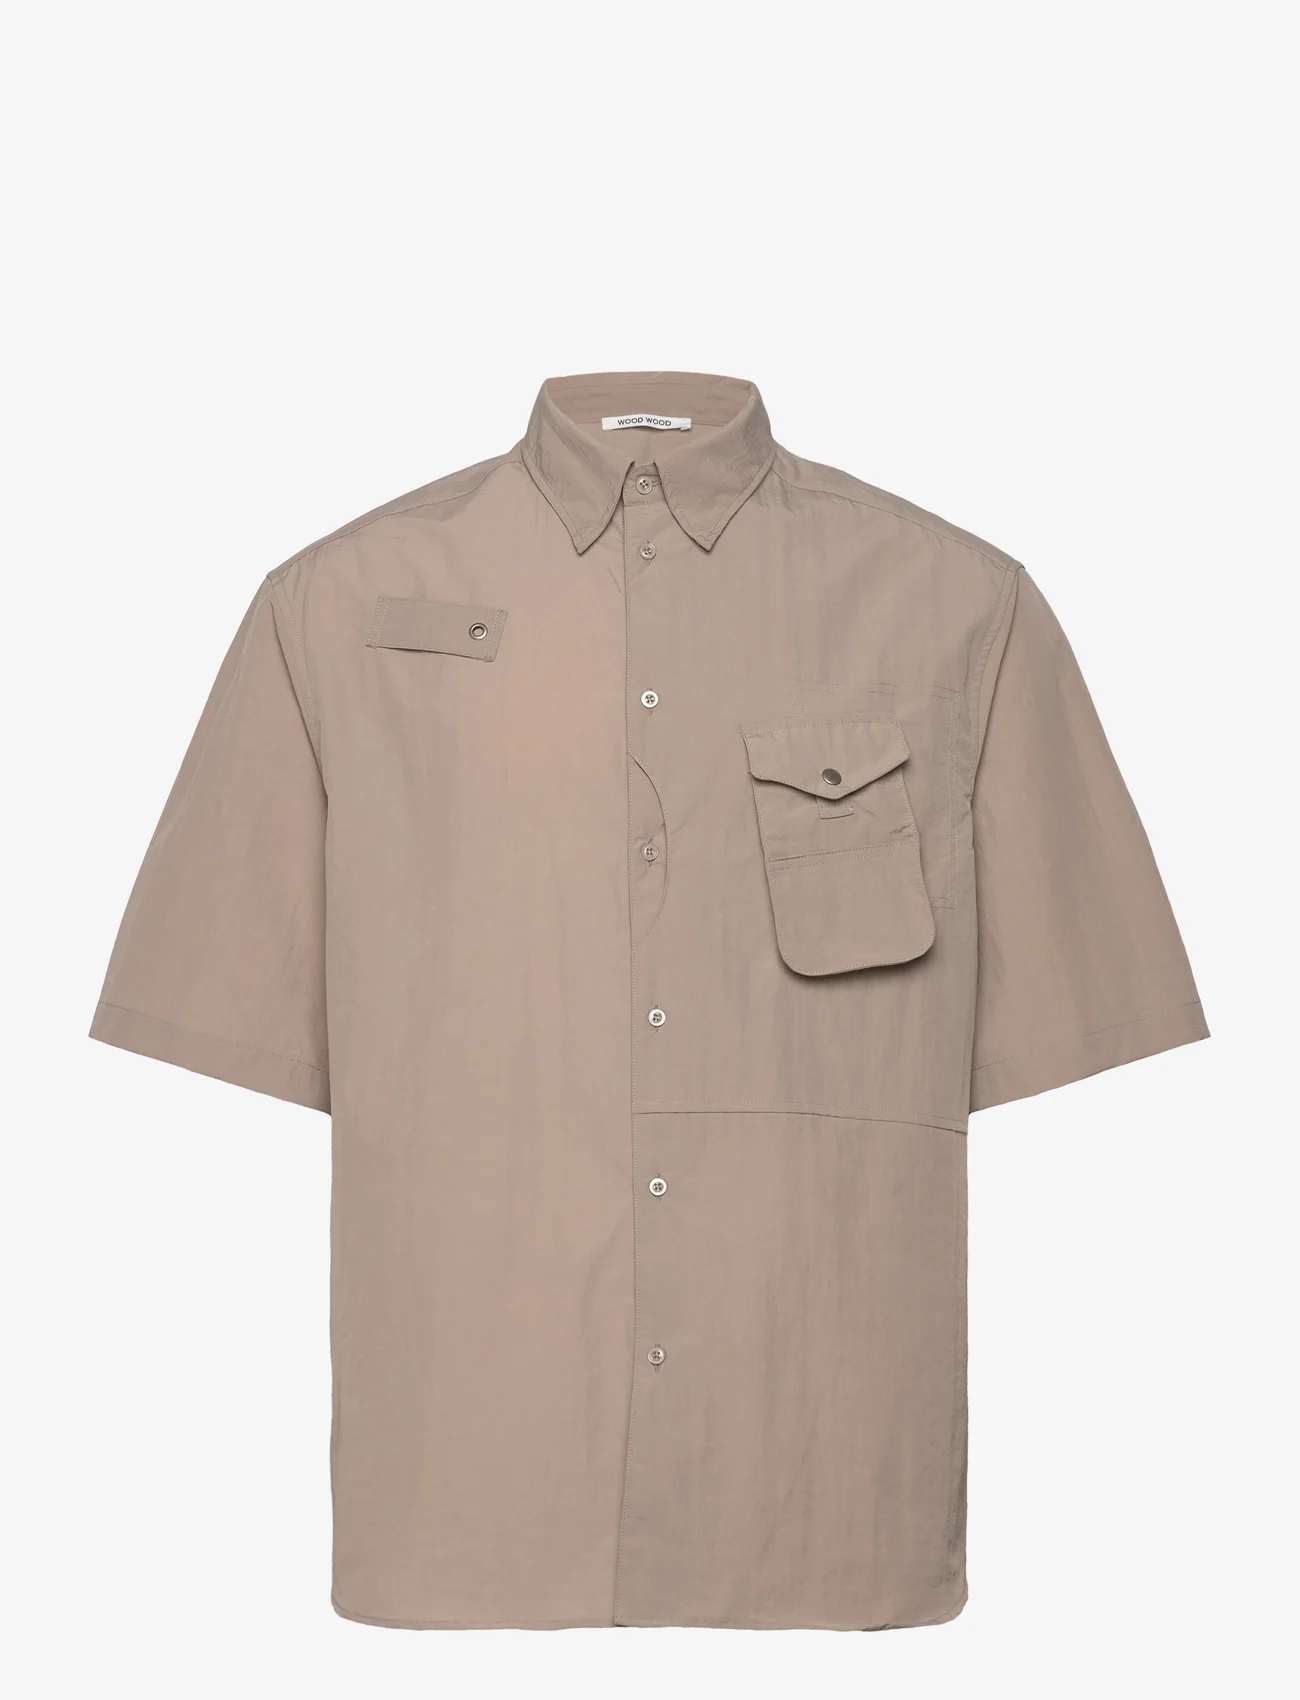 Wood Wood - Jaxson Fisherman Shirt - laisvalaikio marškiniai - khaki - 0